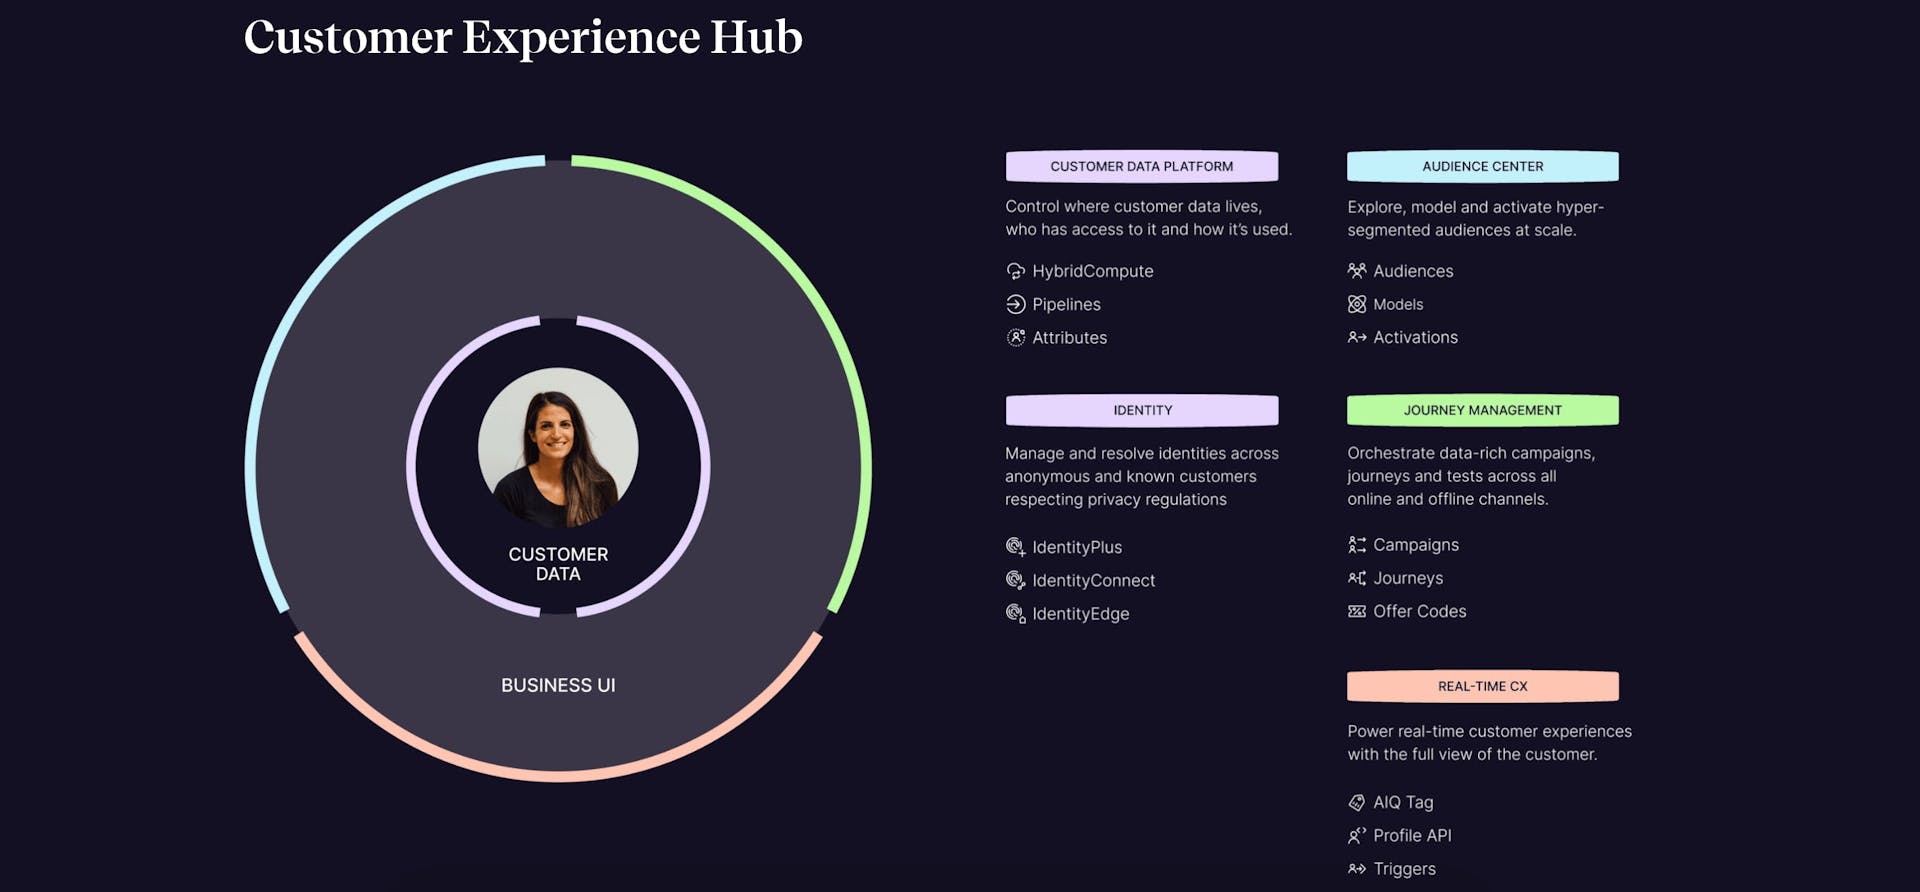 ActionIQ Customer Experience Hub